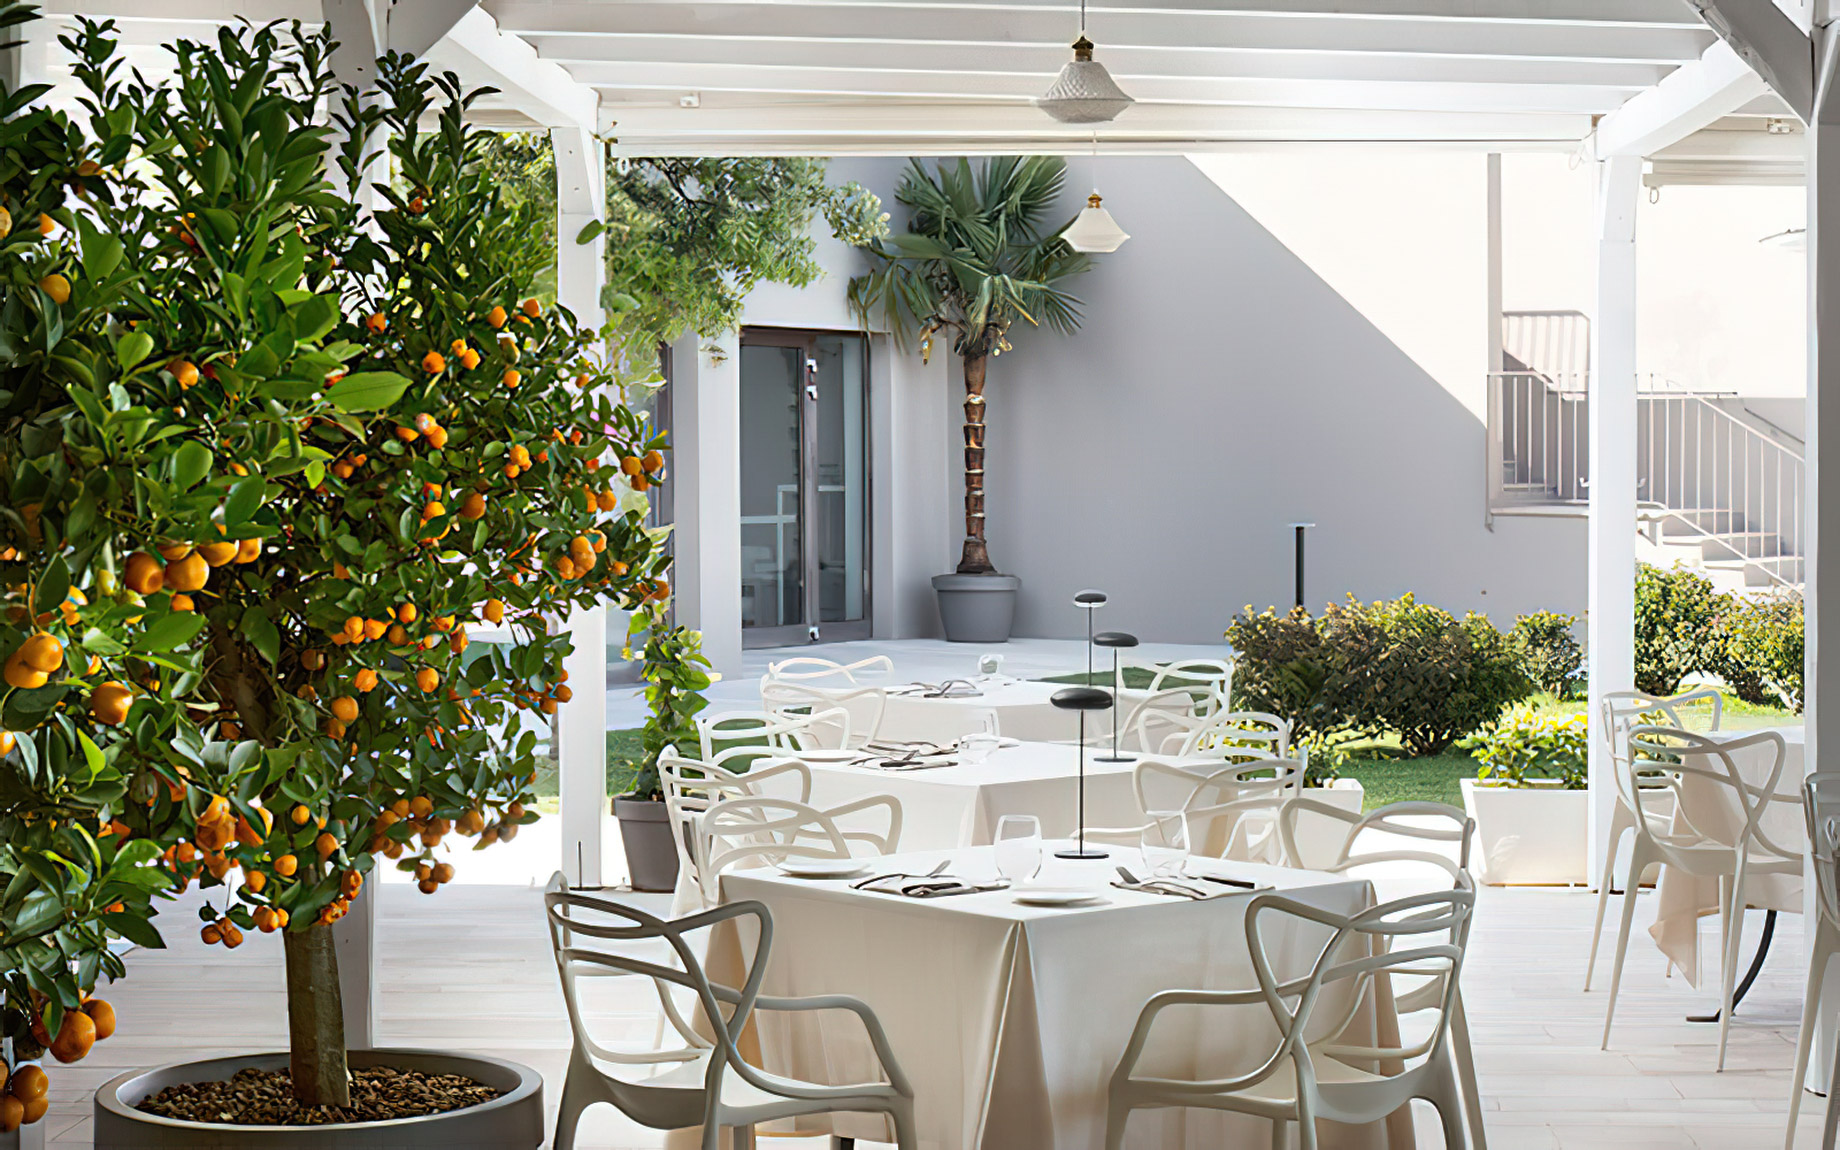 Baglioni Resort Sardinia – San Teodoro, Sardegna, Italy – Ruia Restaurant Outdoor Dining